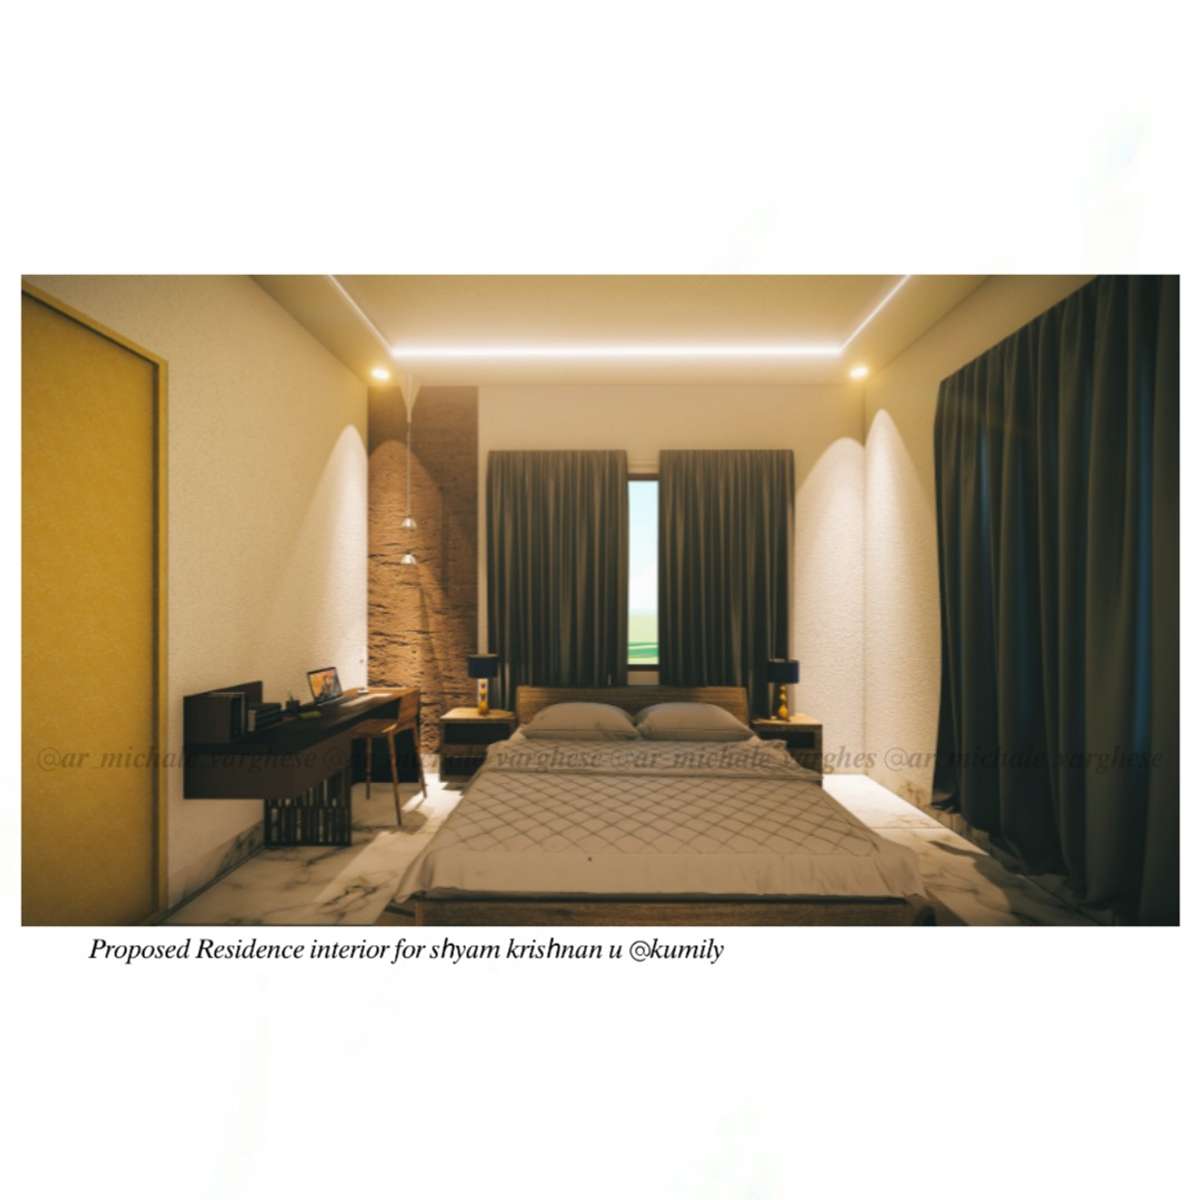 Furniture, Storage, Bedroom Designs by Architect Michale varghese, Kottayam | Kolo